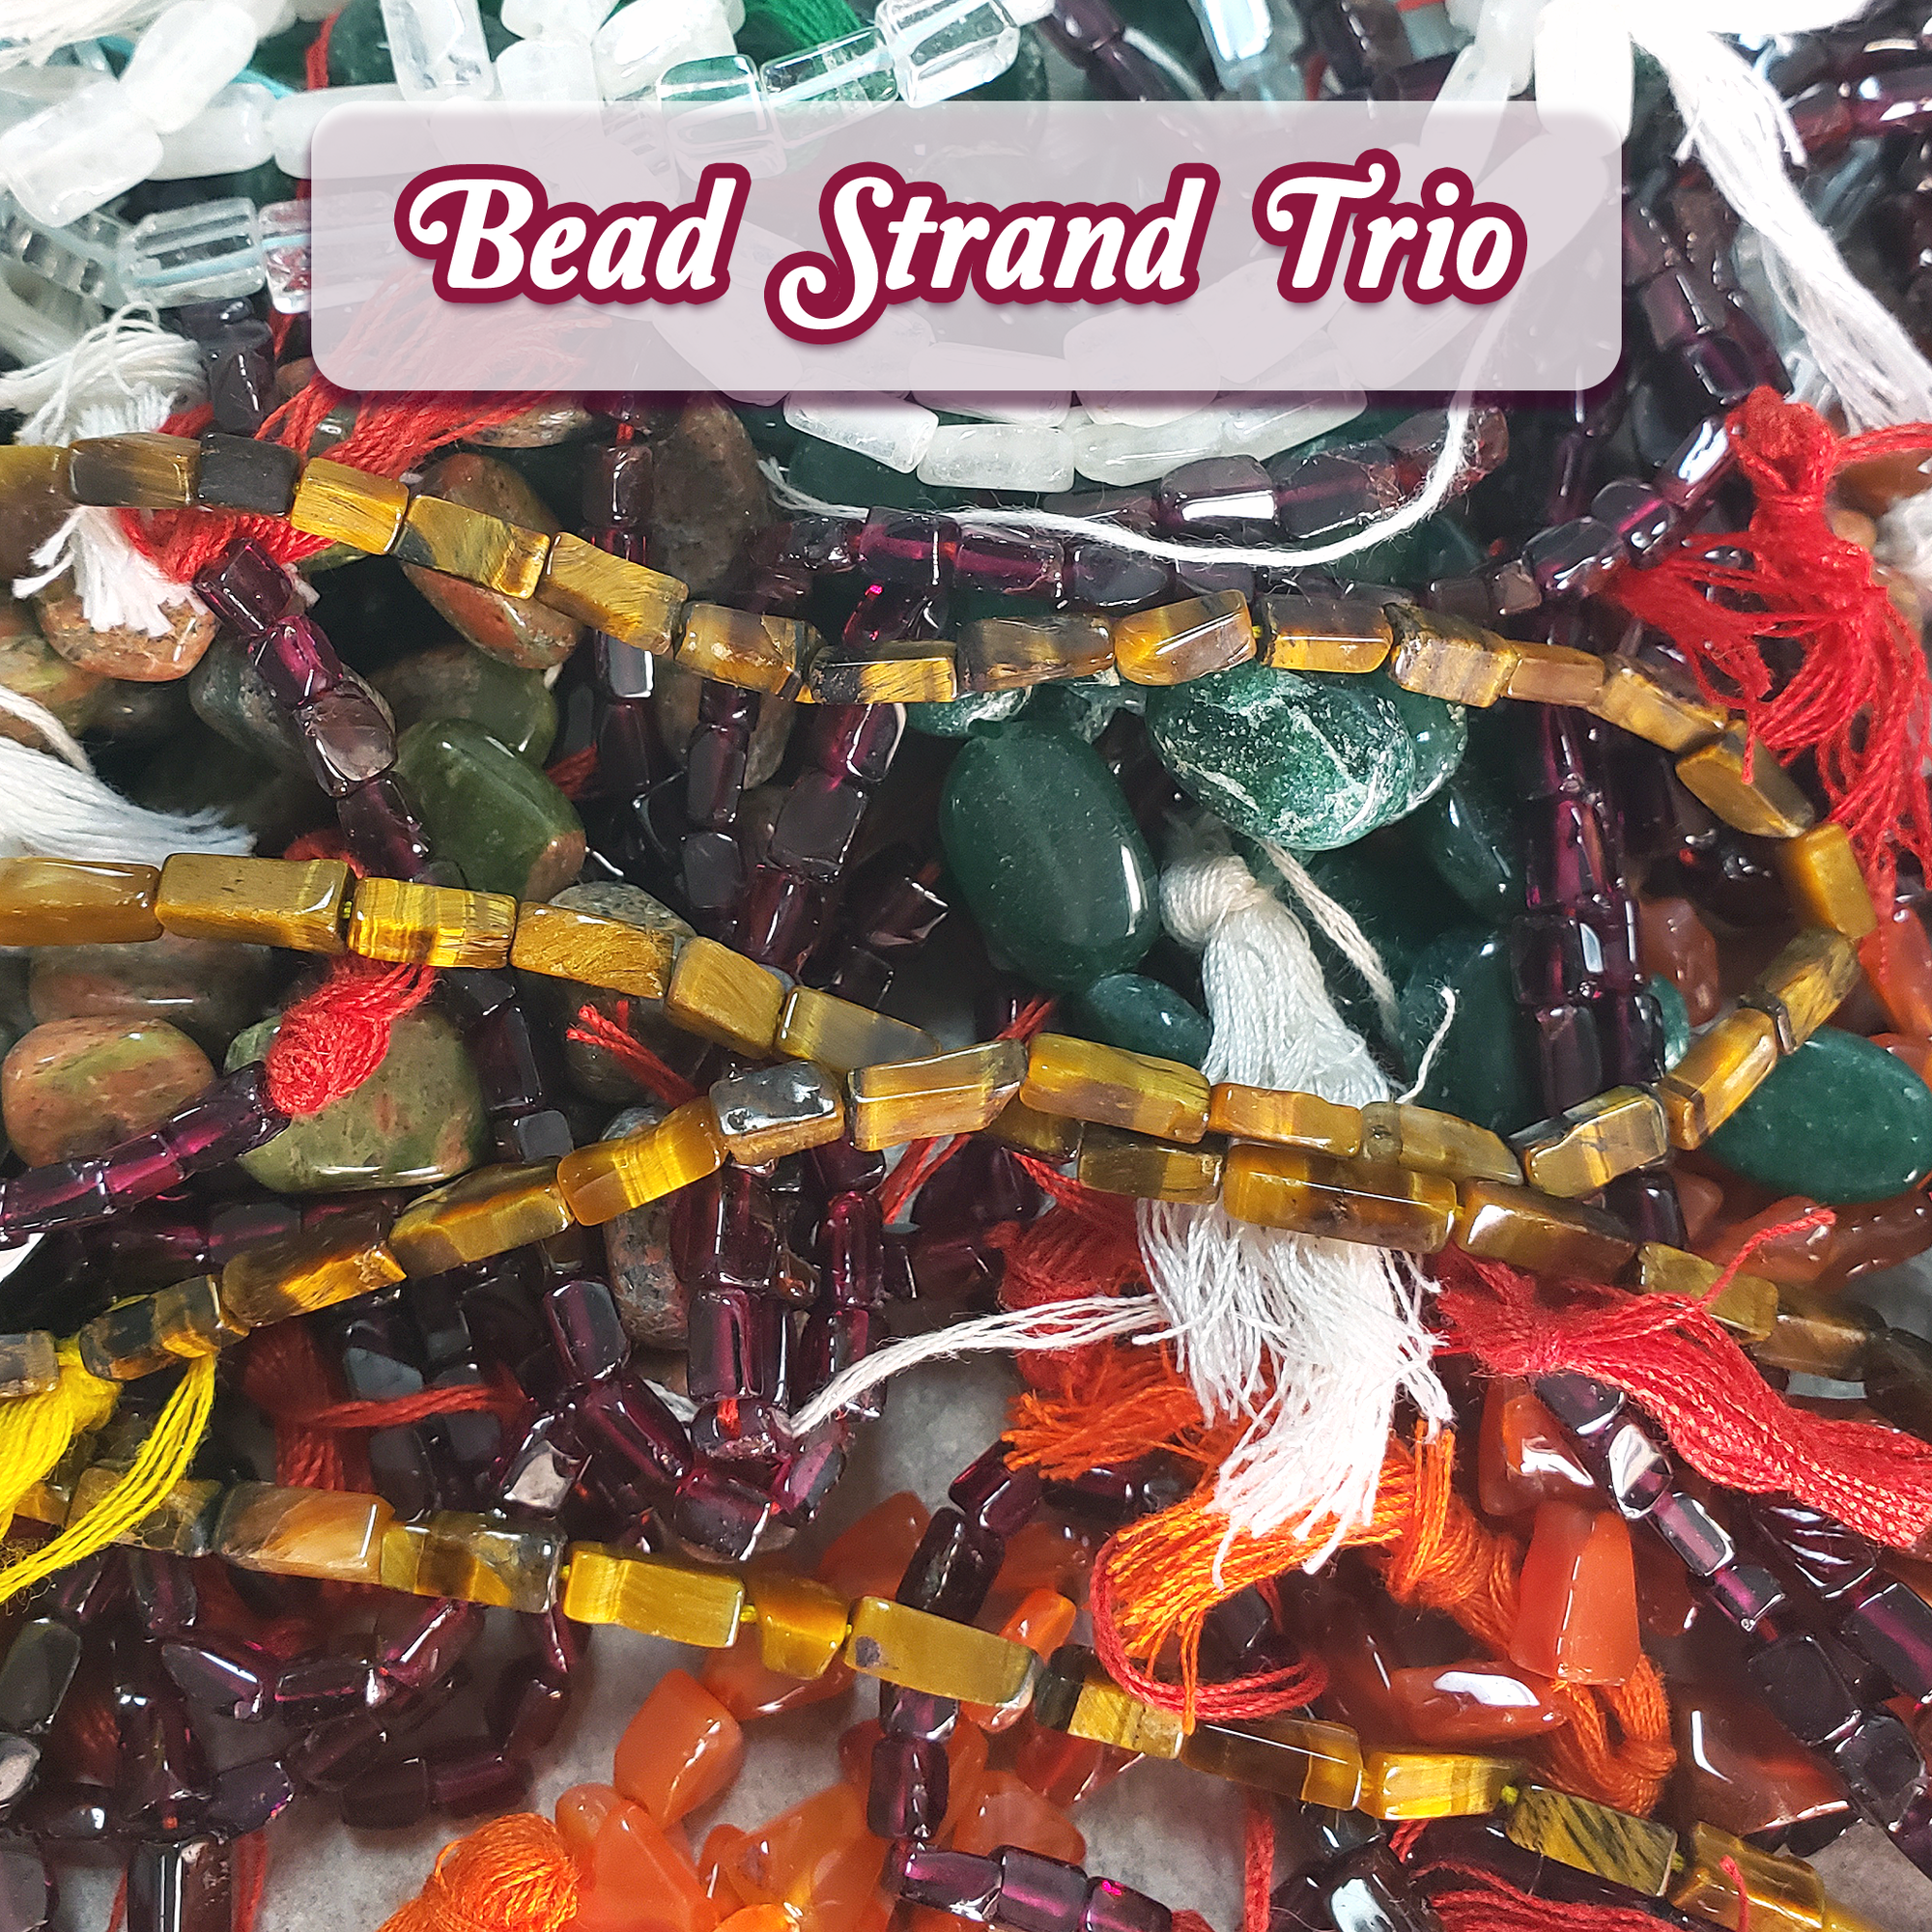 Crystal Beads Blind Bag - 3 Strands of Gemstone Beads - Bead Strand Trio